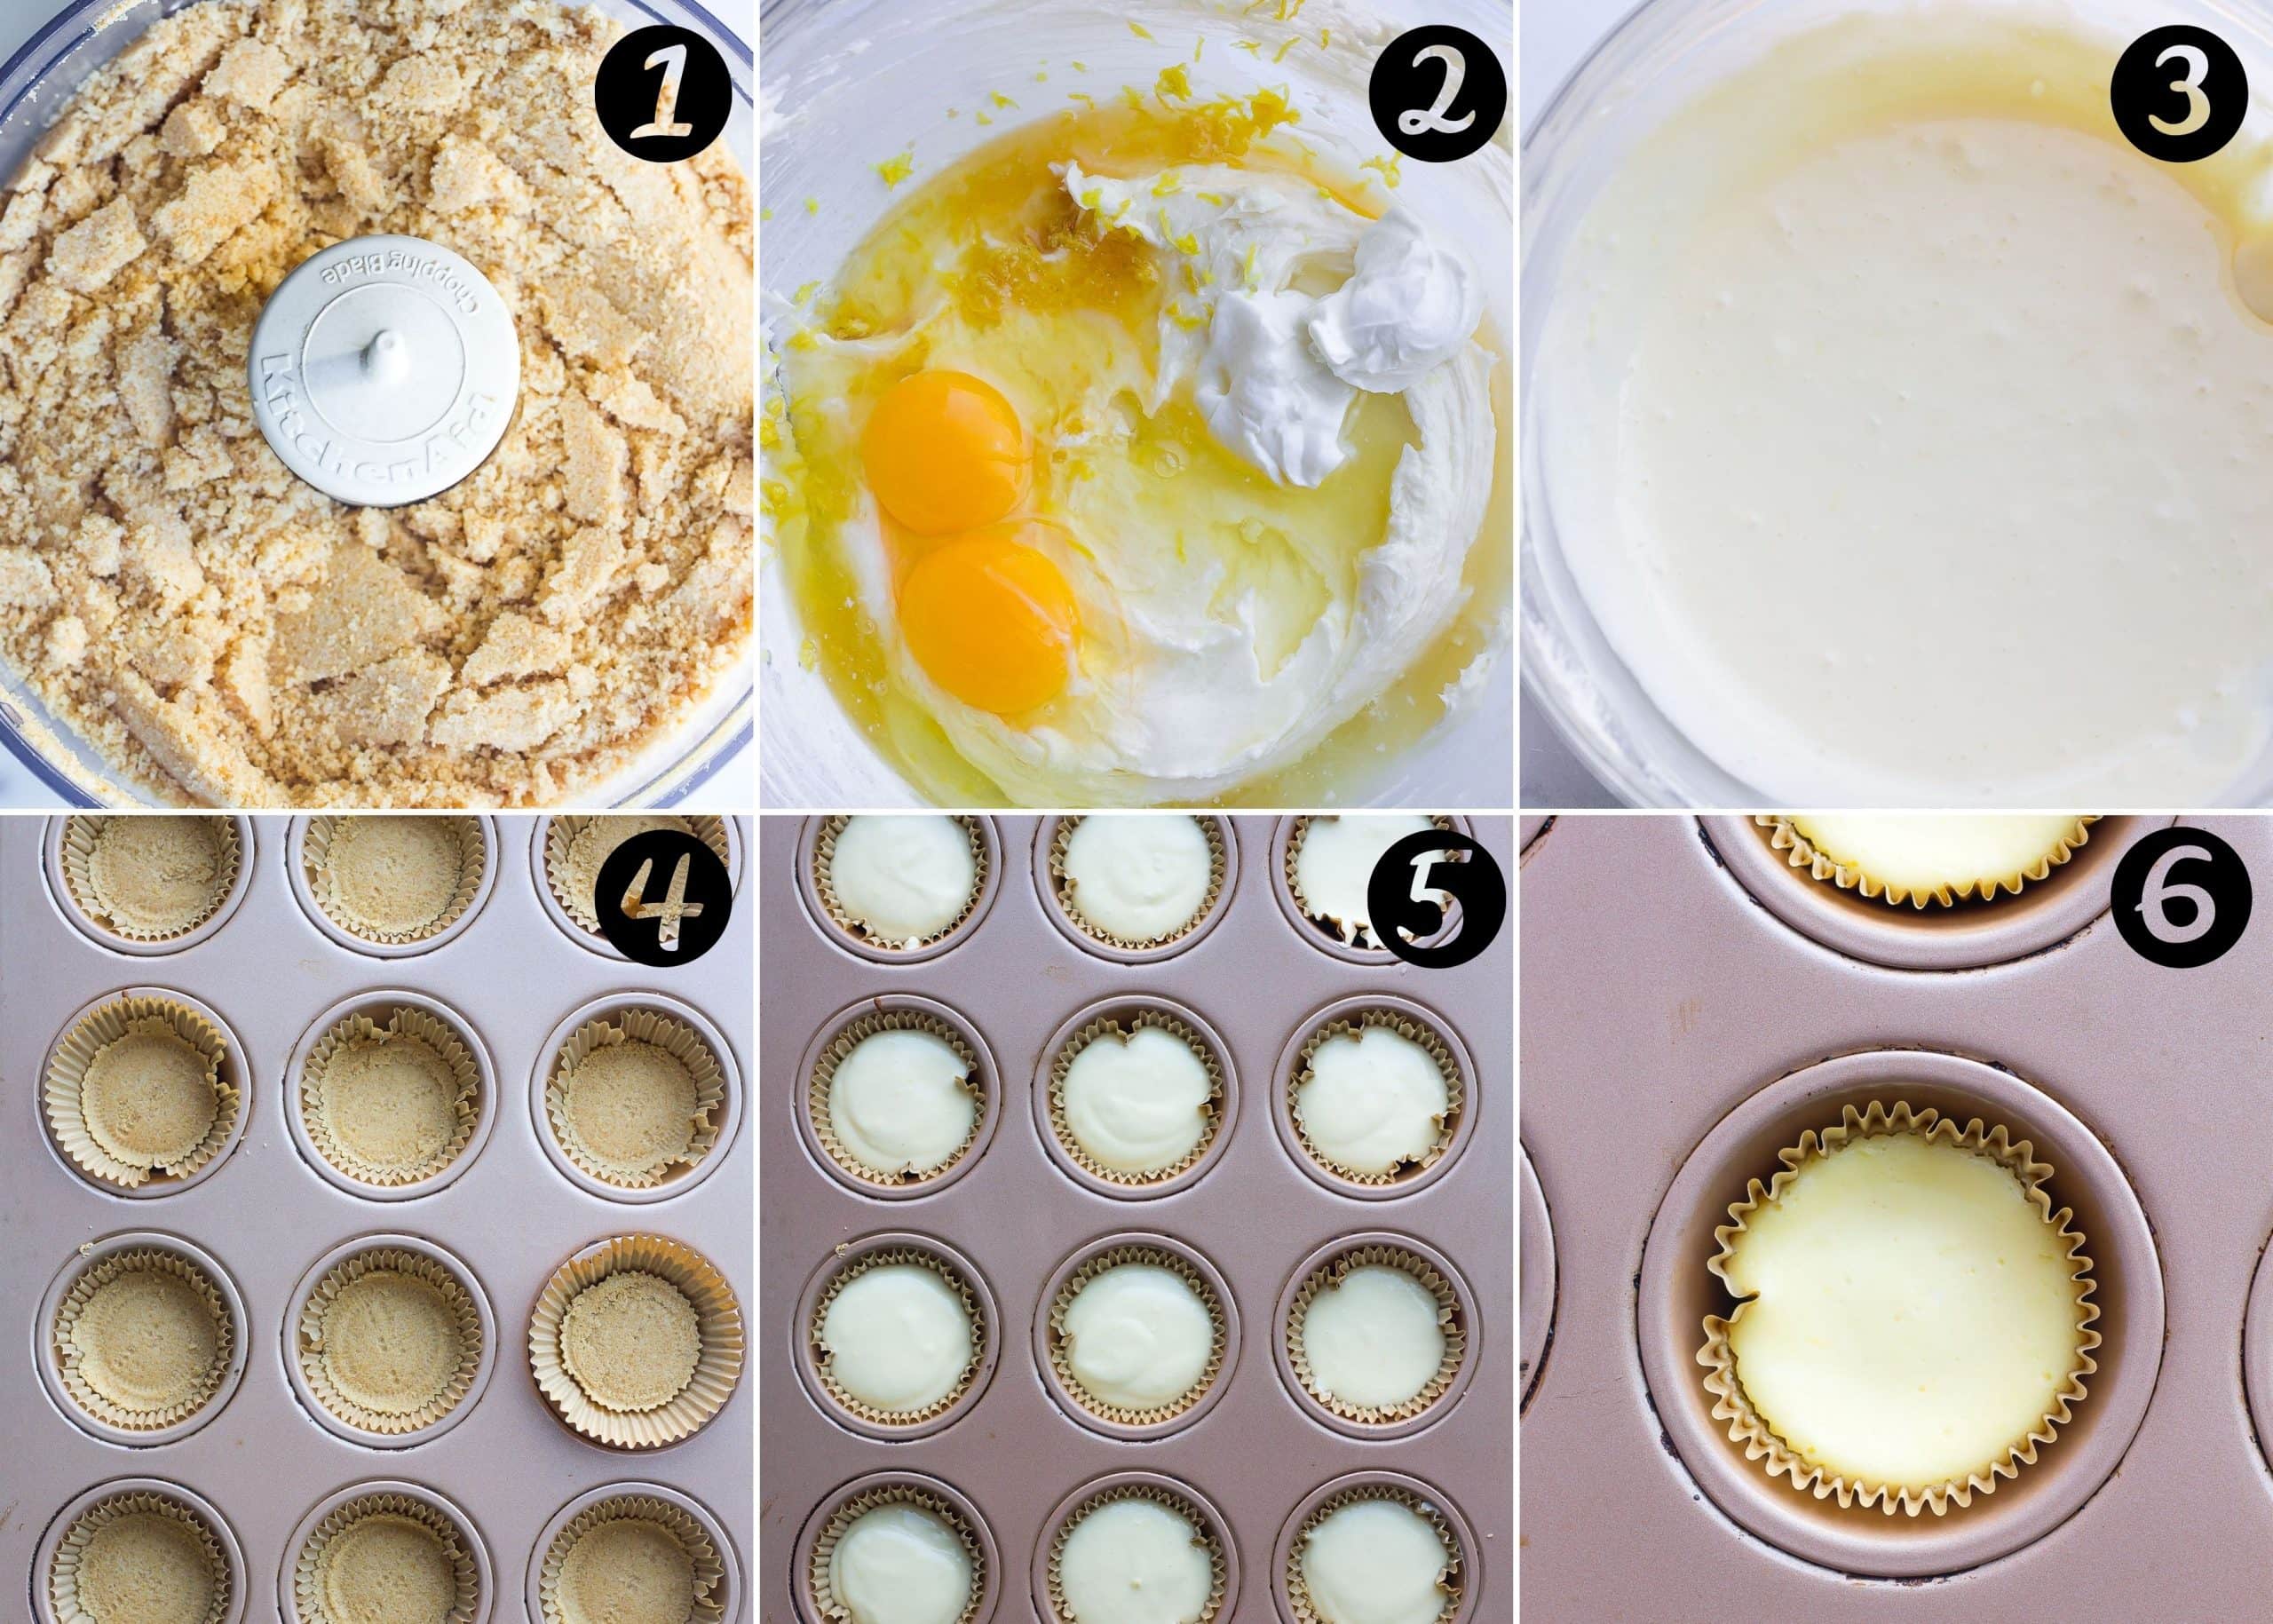 How to make Mini Lemon Cheesecakes step-by-step